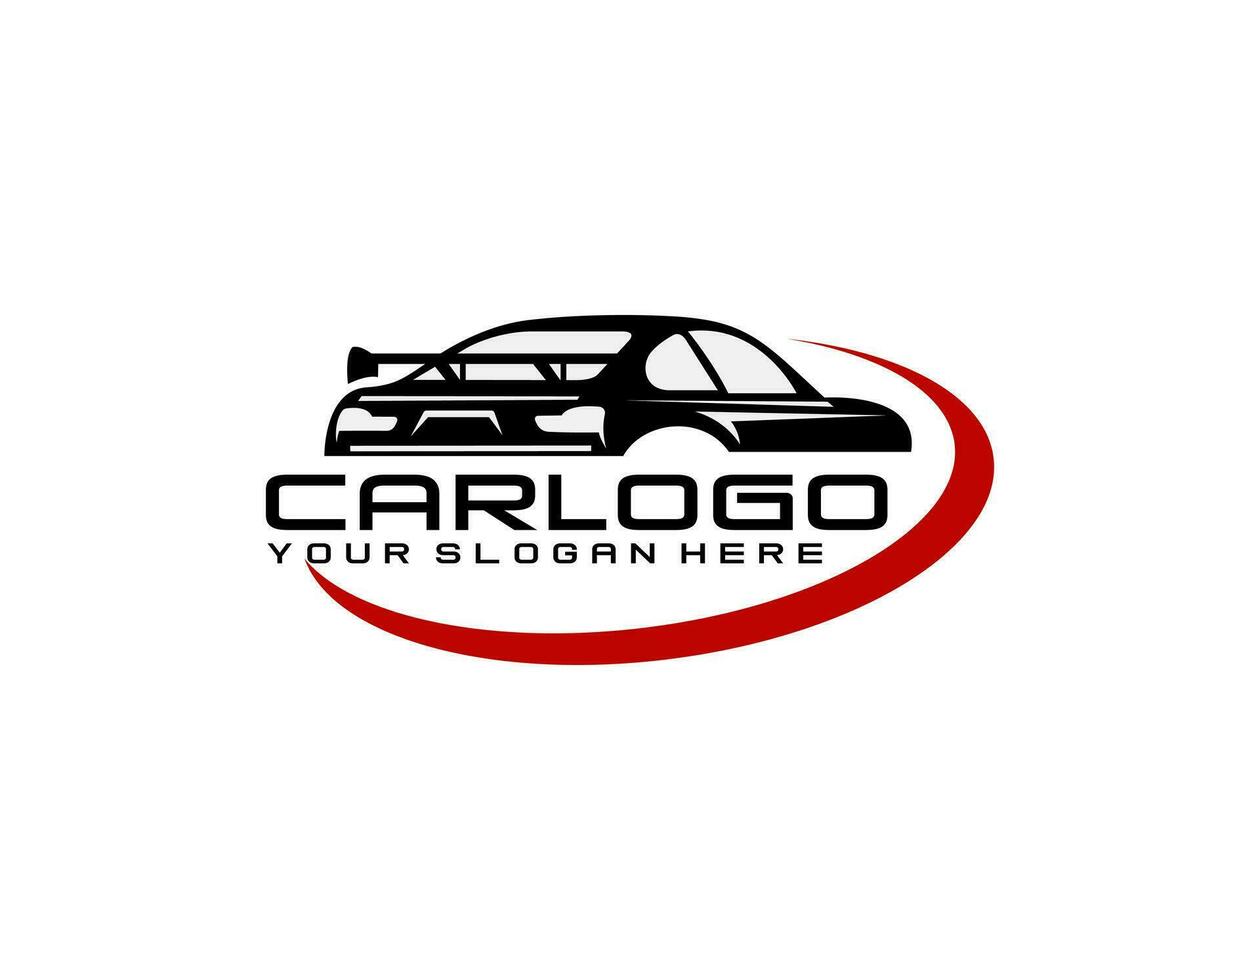 Vector logo of car parts, auto repair